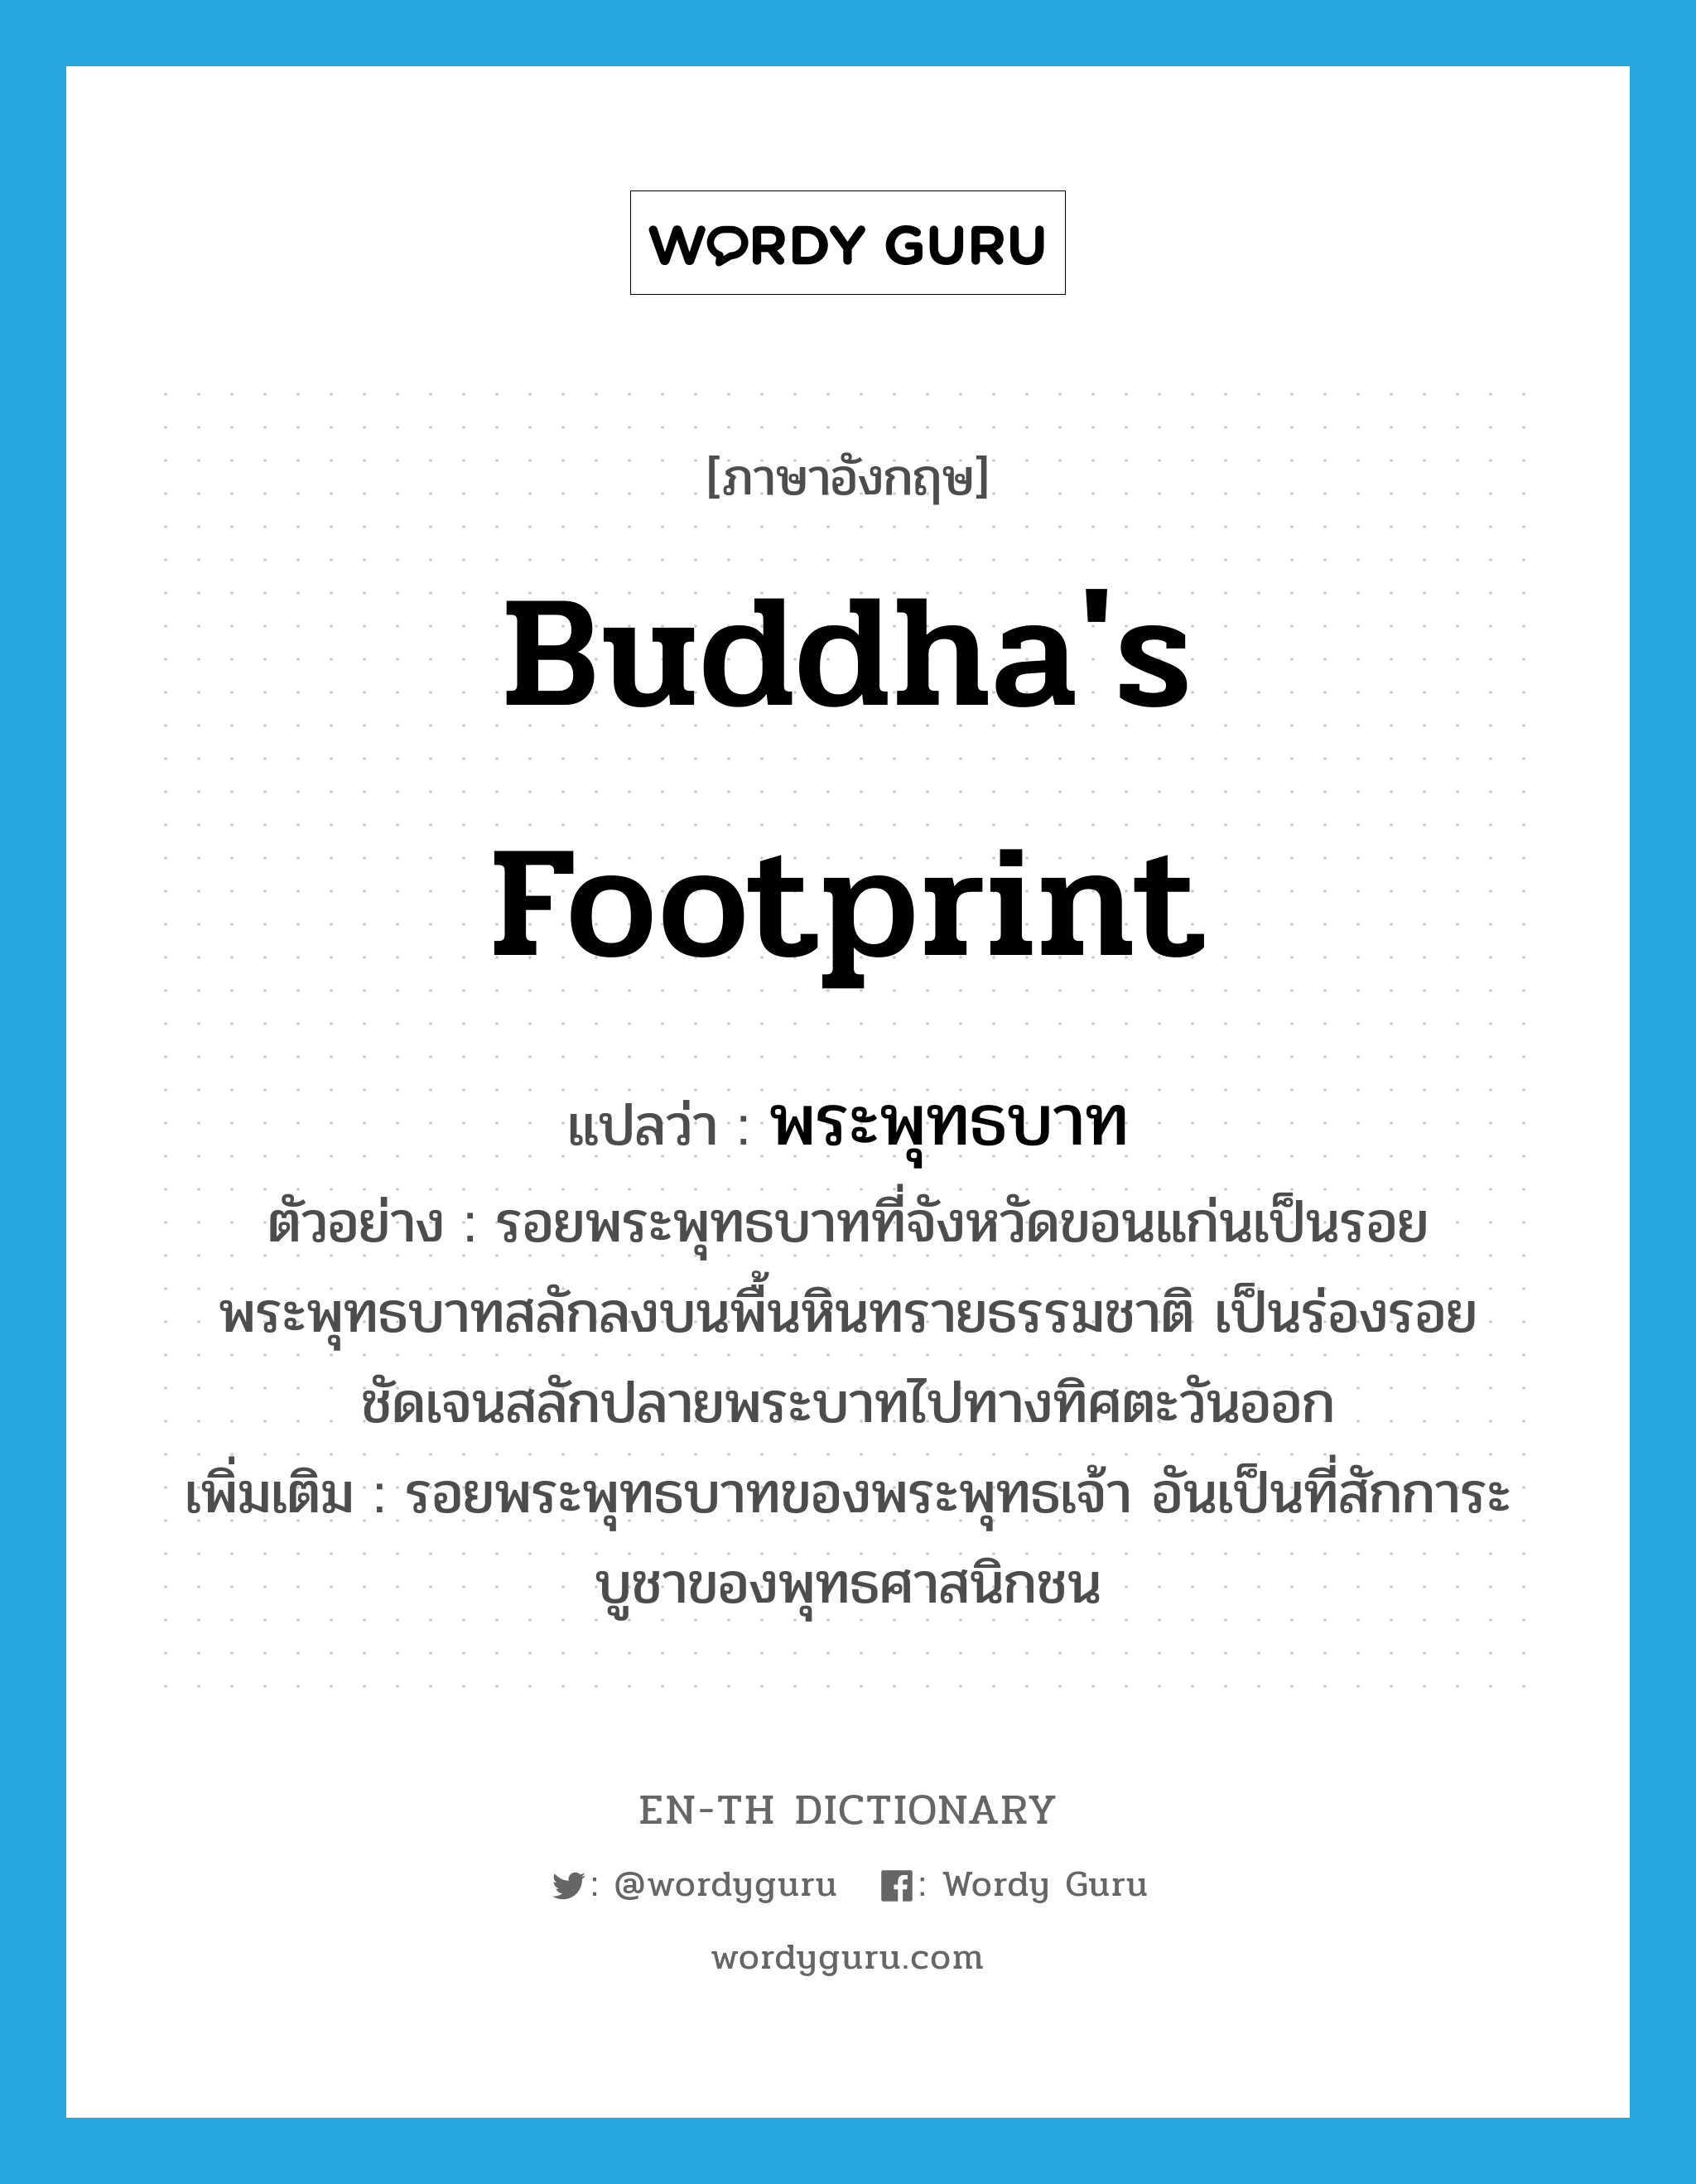 Buddha's footprint แปลว่า?, คำศัพท์ภาษาอังกฤษ Buddha's footprint แปลว่า พระพุทธบาท ประเภท N ตัวอย่าง รอยพระพุทธบาทที่จังหวัดขอนแก่นเป็นรอยพระพุทธบาทสลักลงบนพื้นหินทรายธรรมชาติ เป็นร่องรอยชัดเจนสลักปลายพระบาทไปทางทิศตะวันออก เพิ่มเติม รอยพระพุทธบาทของพระพุทธเจ้า อันเป็นที่สักการะบูชาของพุทธศาสนิกชน หมวด N